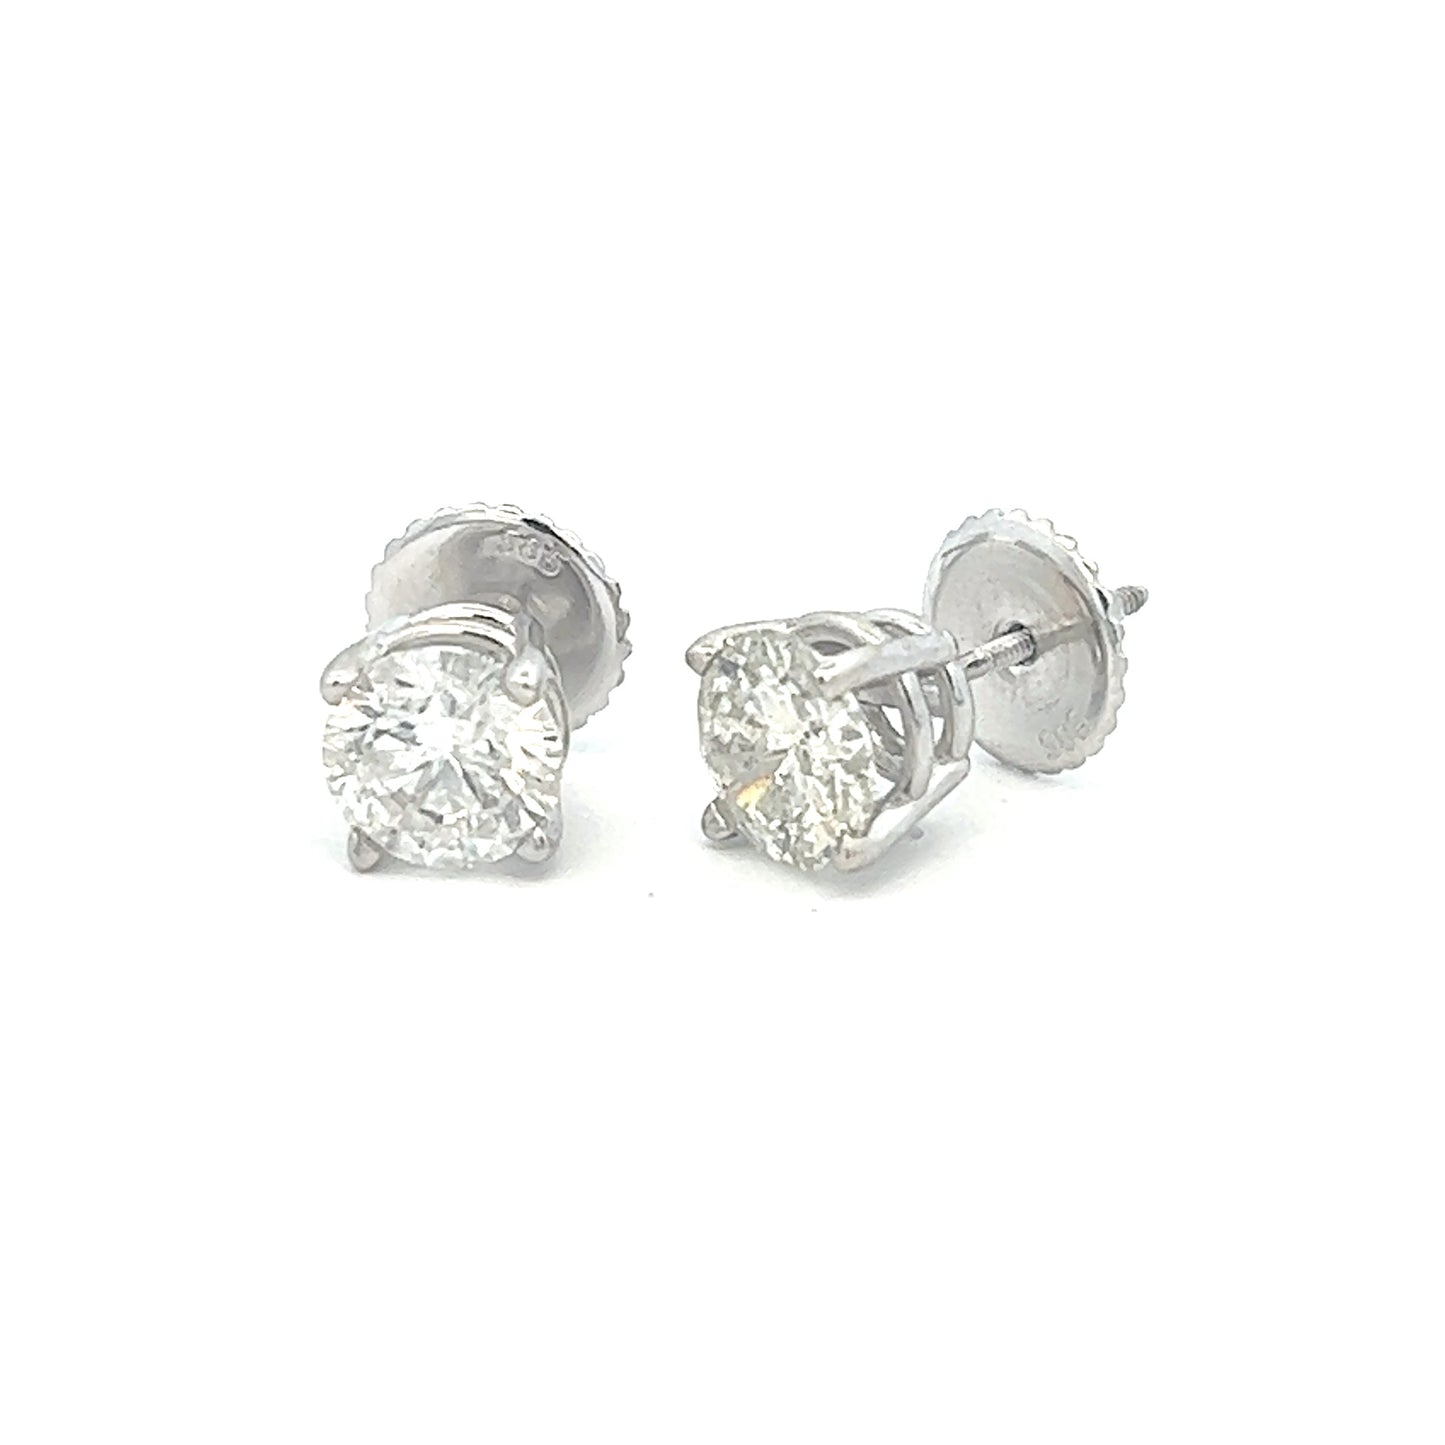 3 Carat Diamond Stud Earrings | Screw Back Diamond Stud Earrings